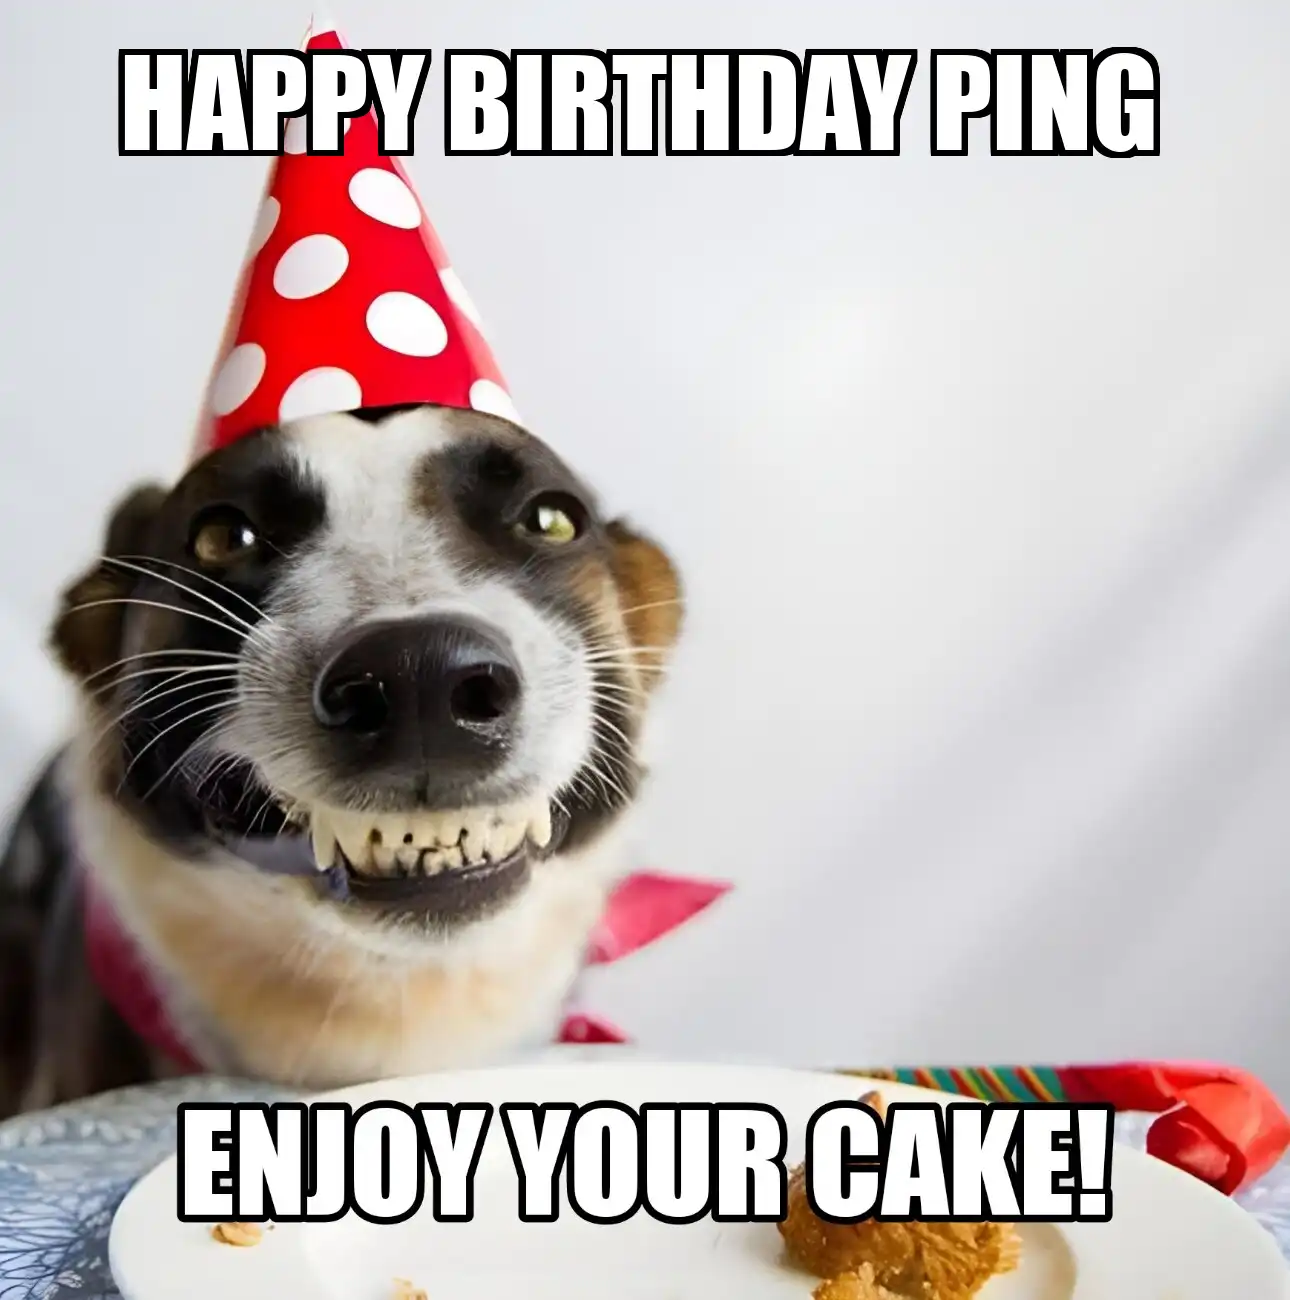 Happy Birthday Ping Enjoy Your Cake Dog Meme